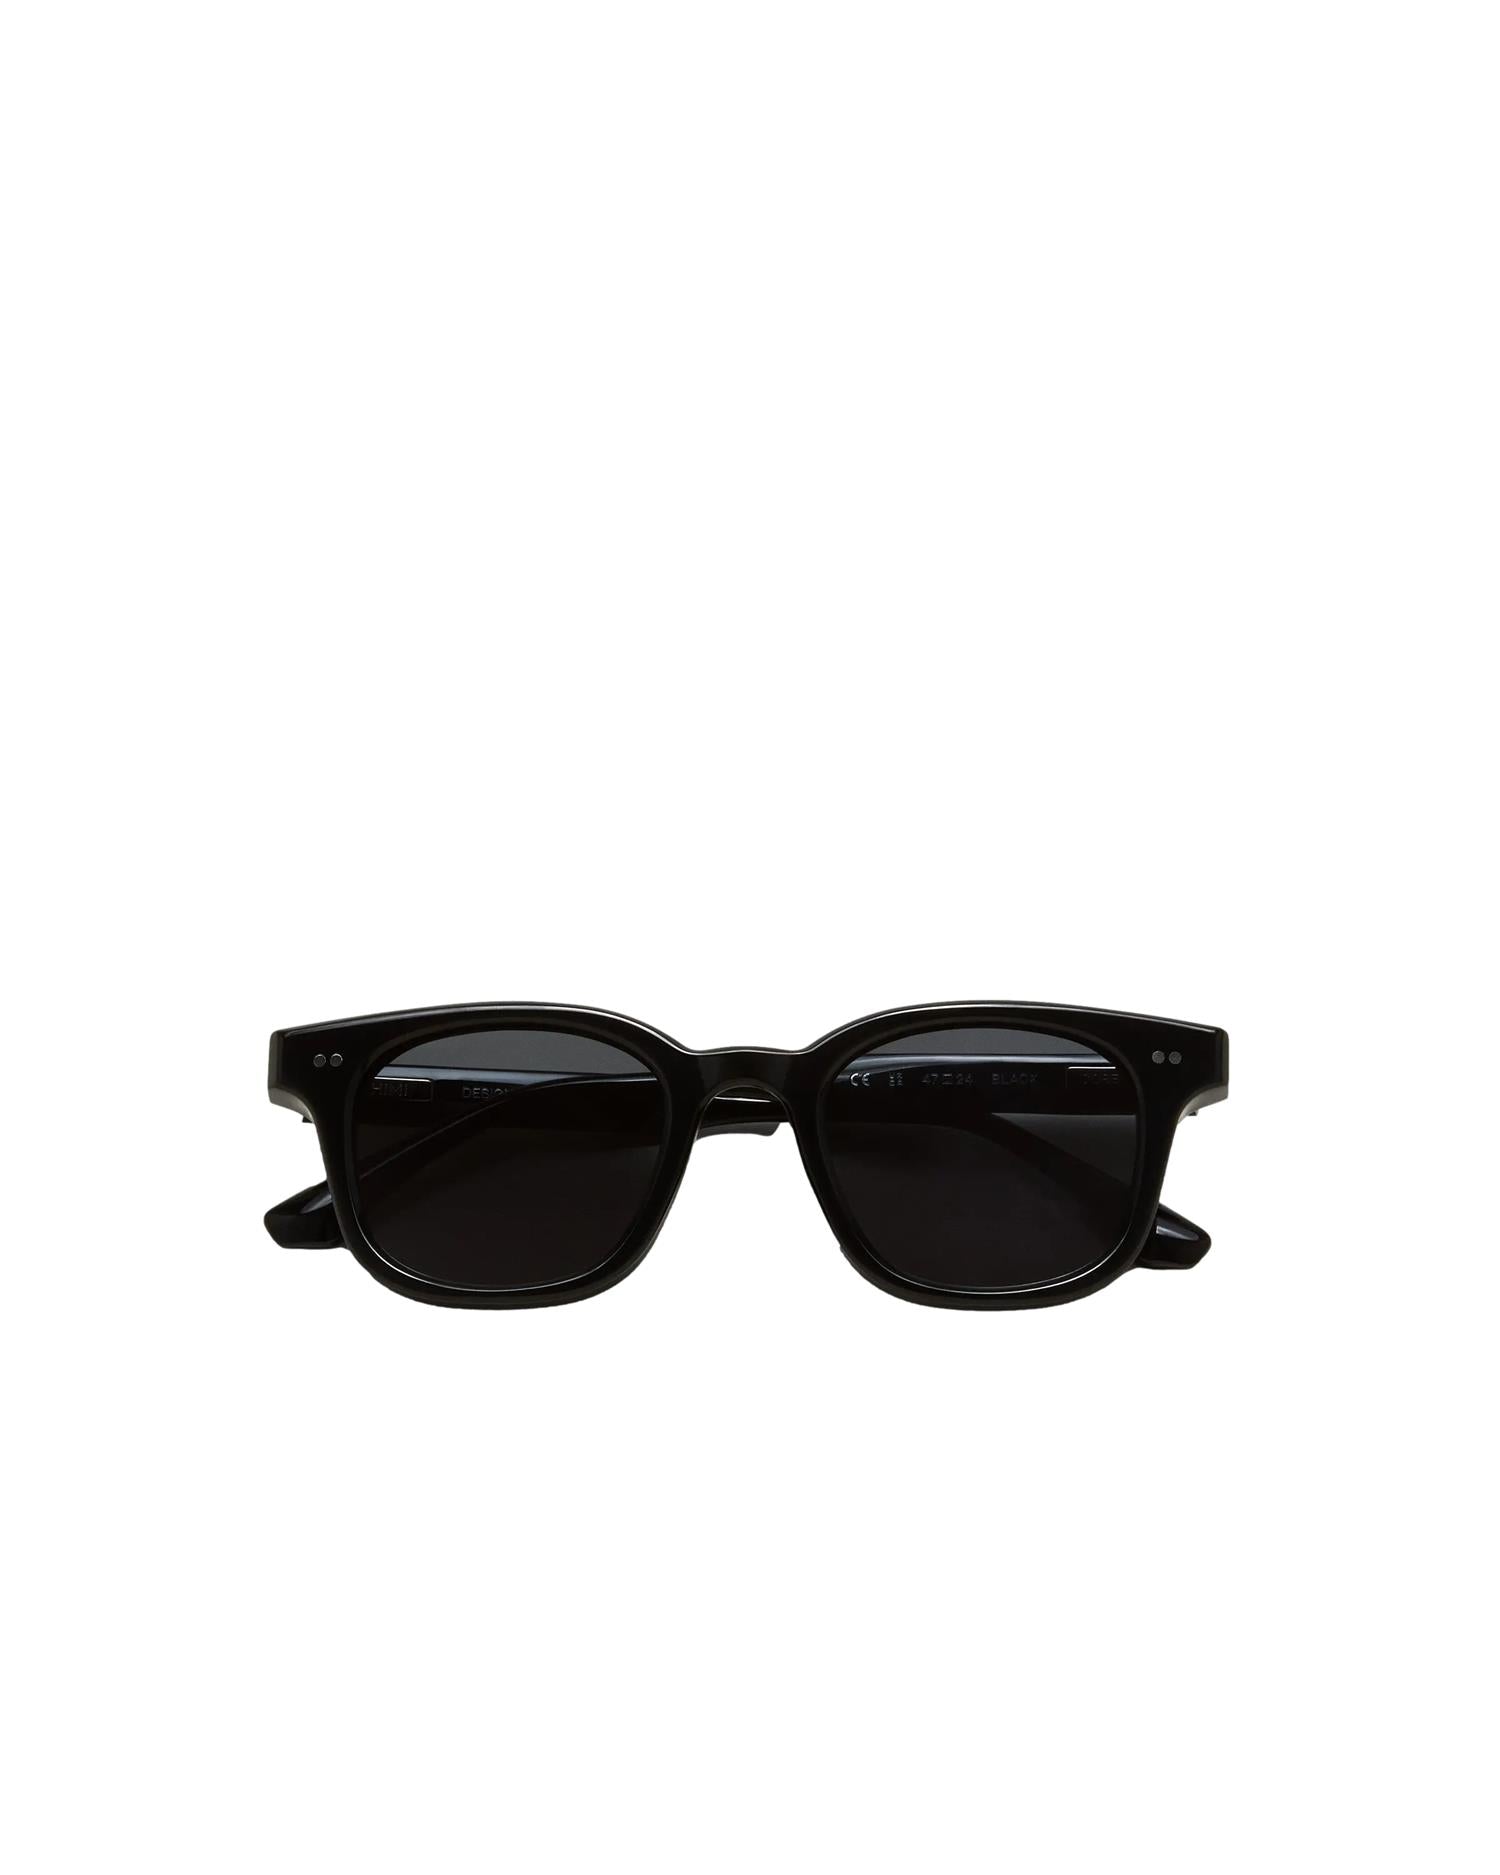 Shop Chimi Eyewear Black 02 Core Solbriller Sort her - Norsk, rask levering ikkebutikk.no